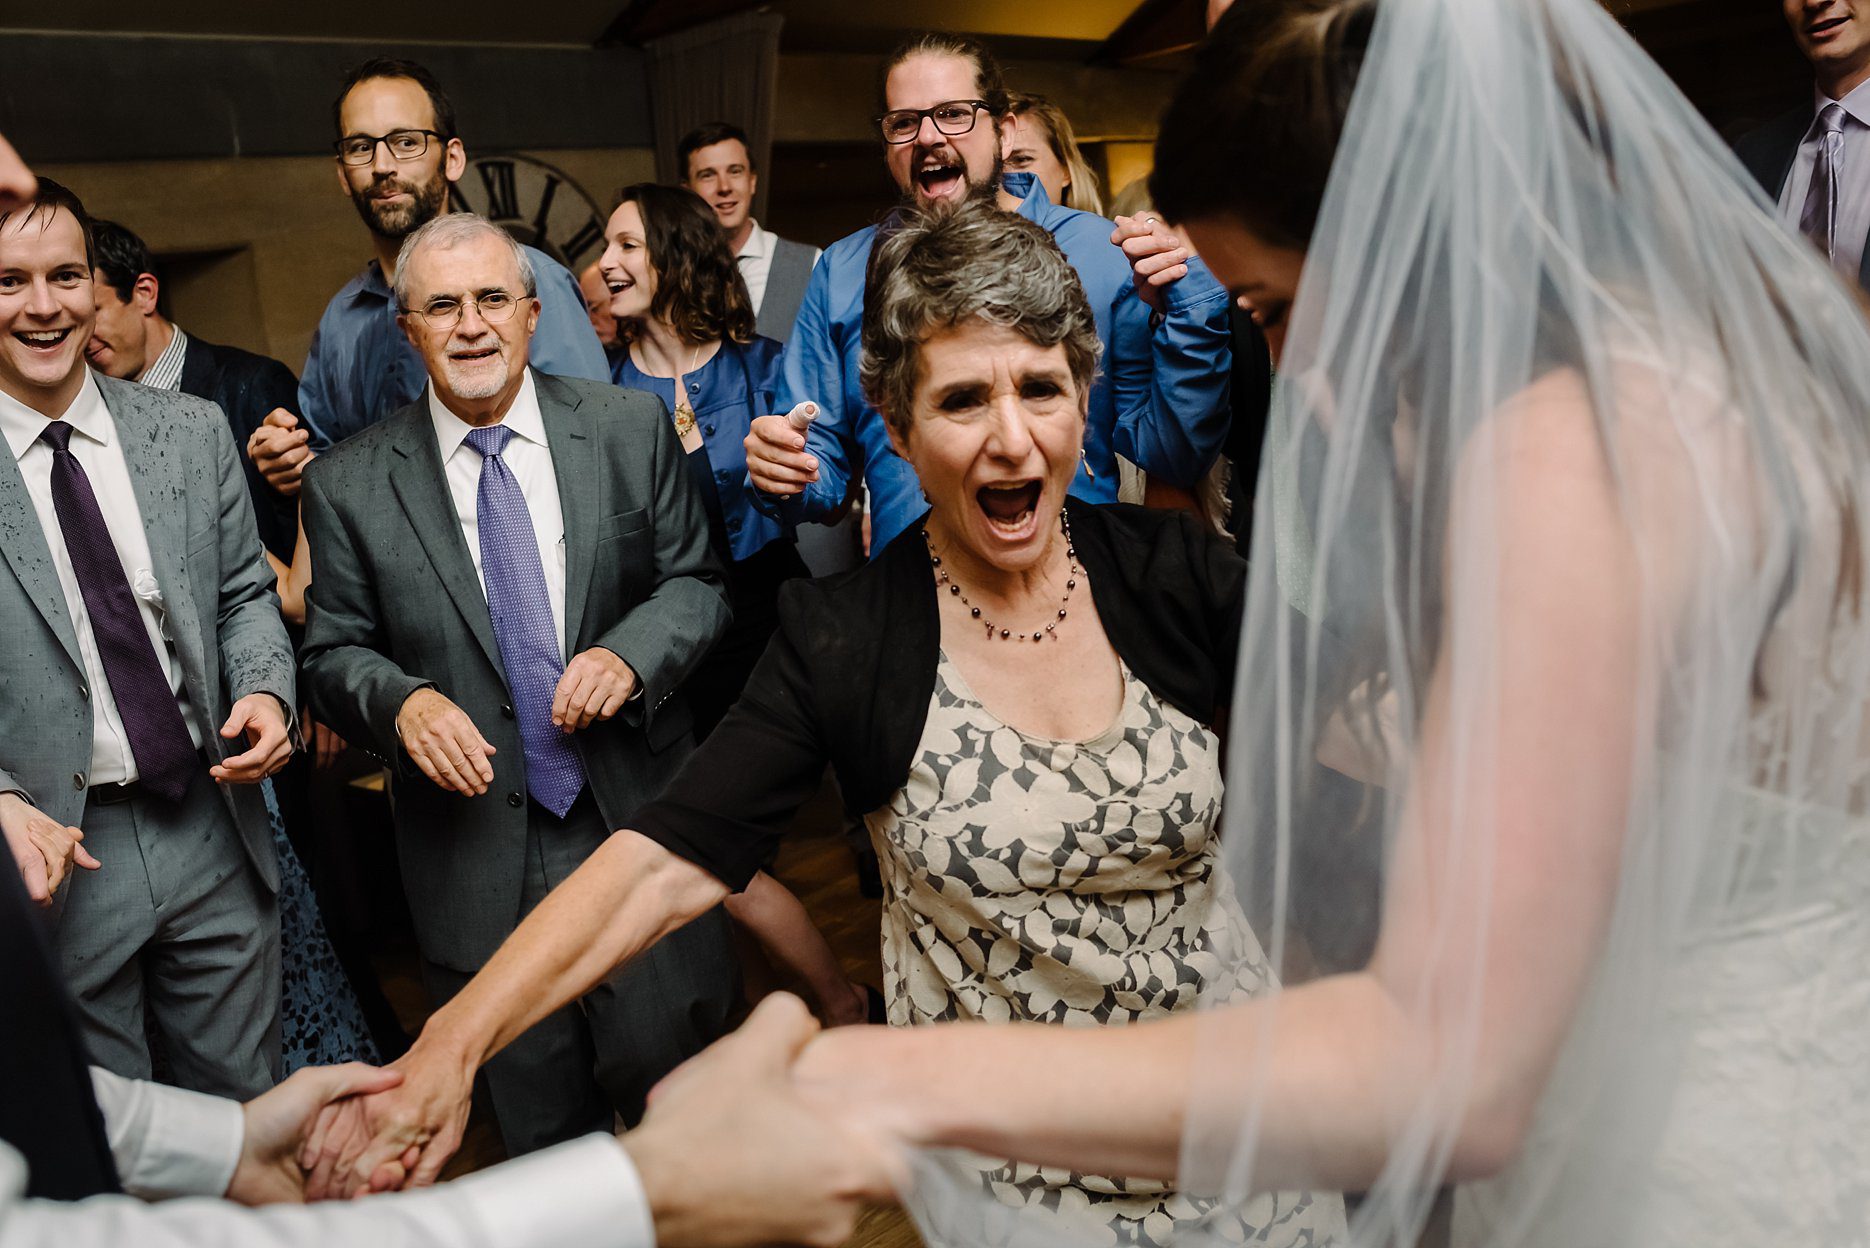 Hora Dance, Jewish Wedding, Ramekins Sonoma, Bride and Groom, Cosmo Alley Cats, Lauren Miller Events, Sonoma Wedding Photographer